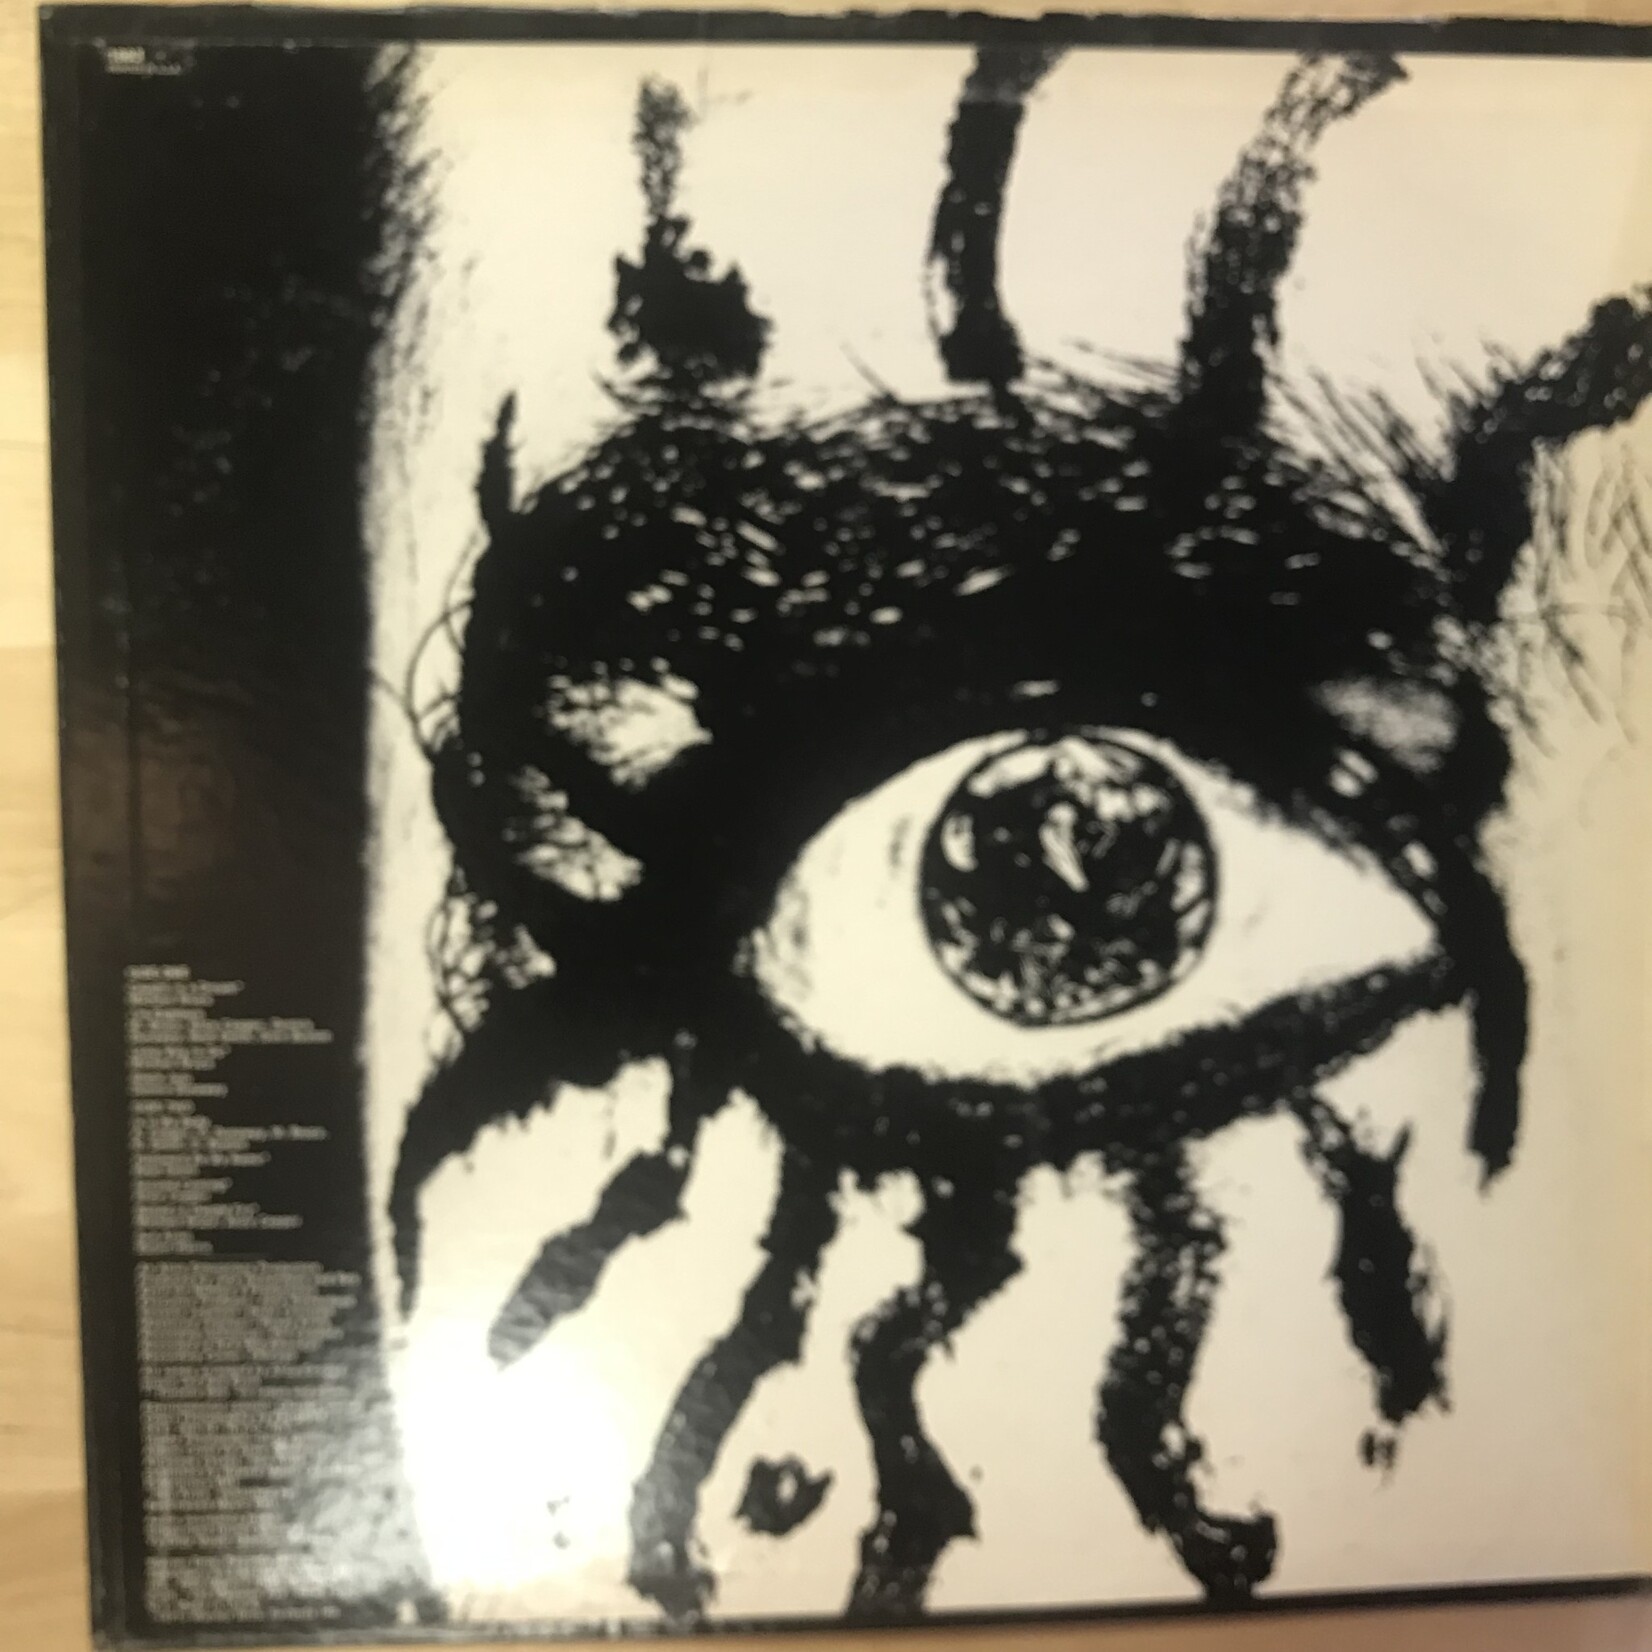 Alice Cooper - Love It To Death (Uncensored w/ Pink Label) - 1883 - Vinyl LP (USED)